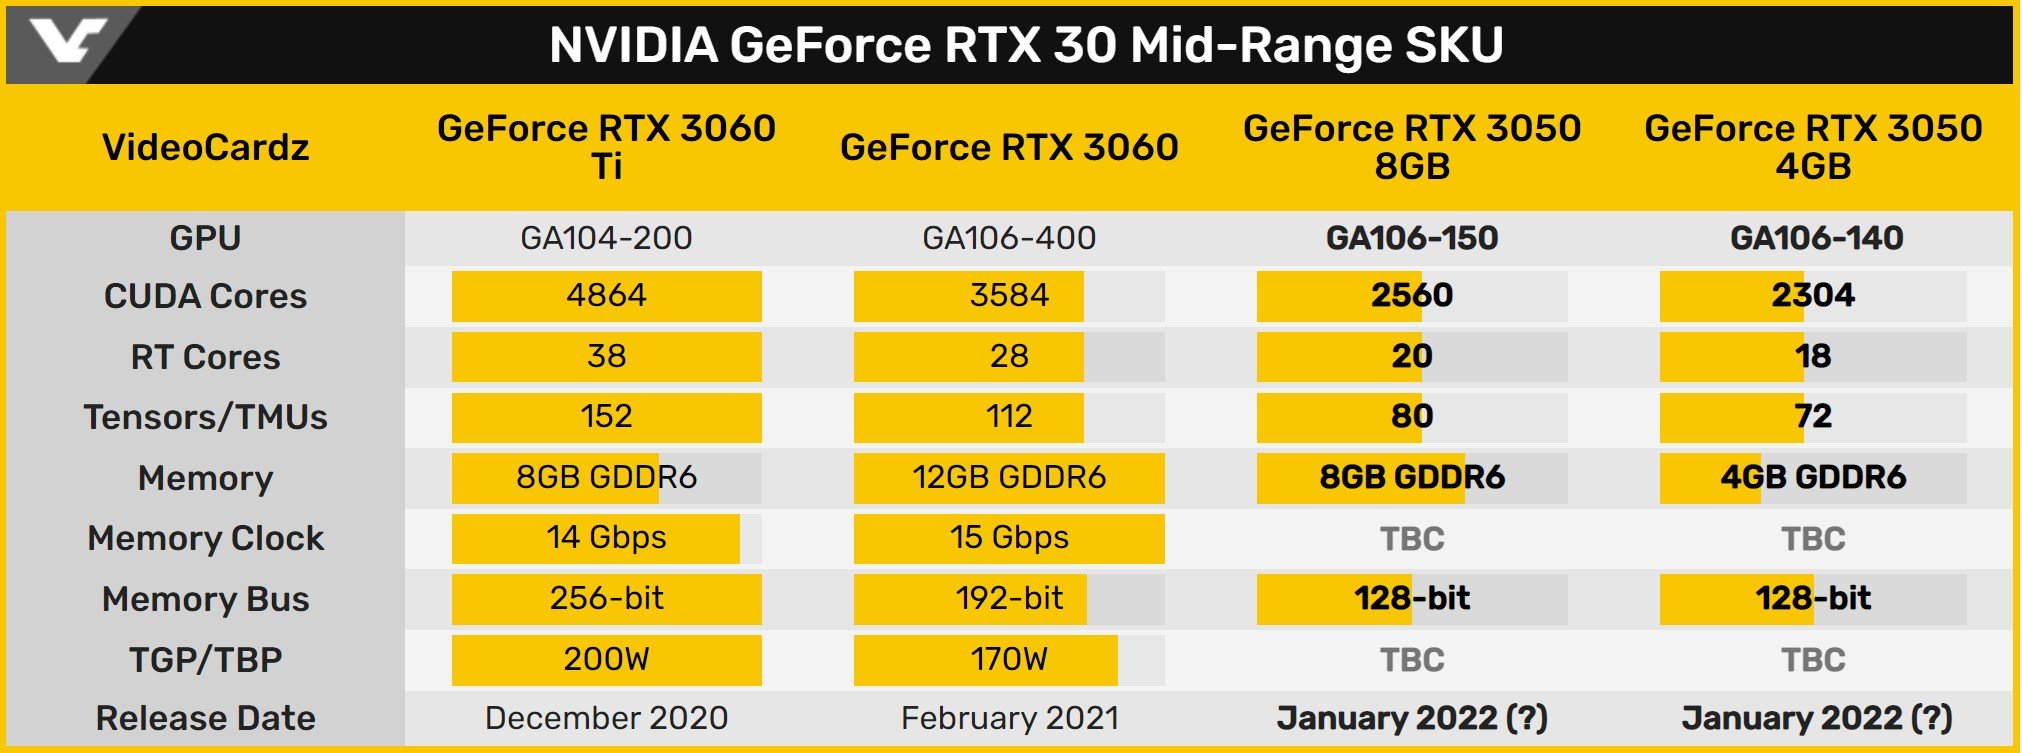 GeForce RTX 3050 specs